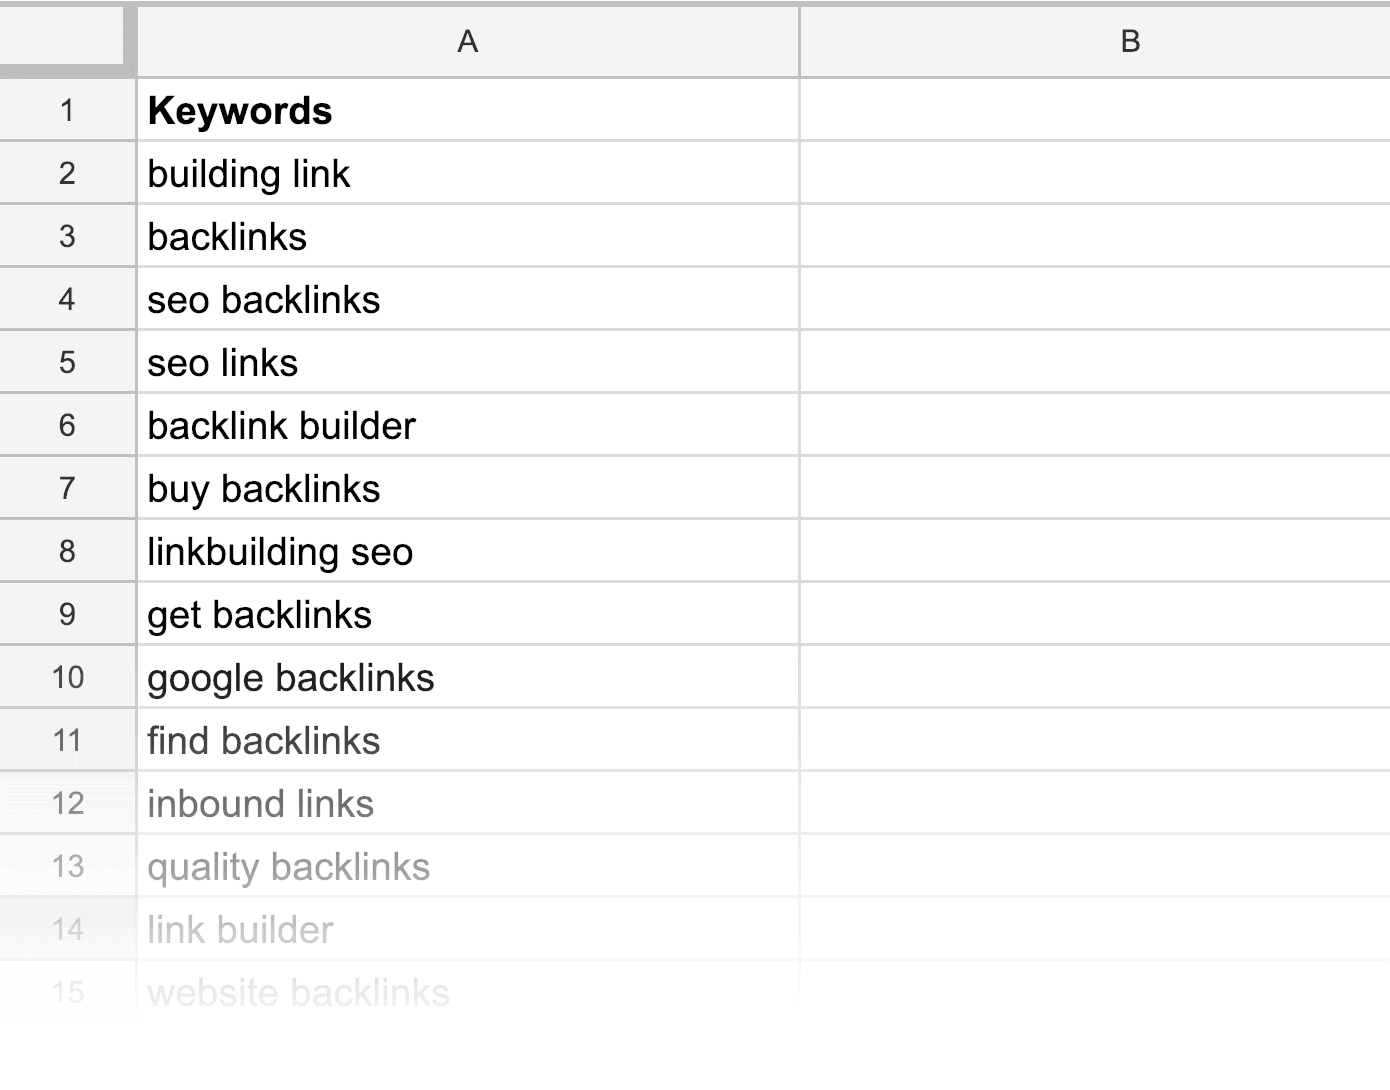 Keyword list in Google Sheets